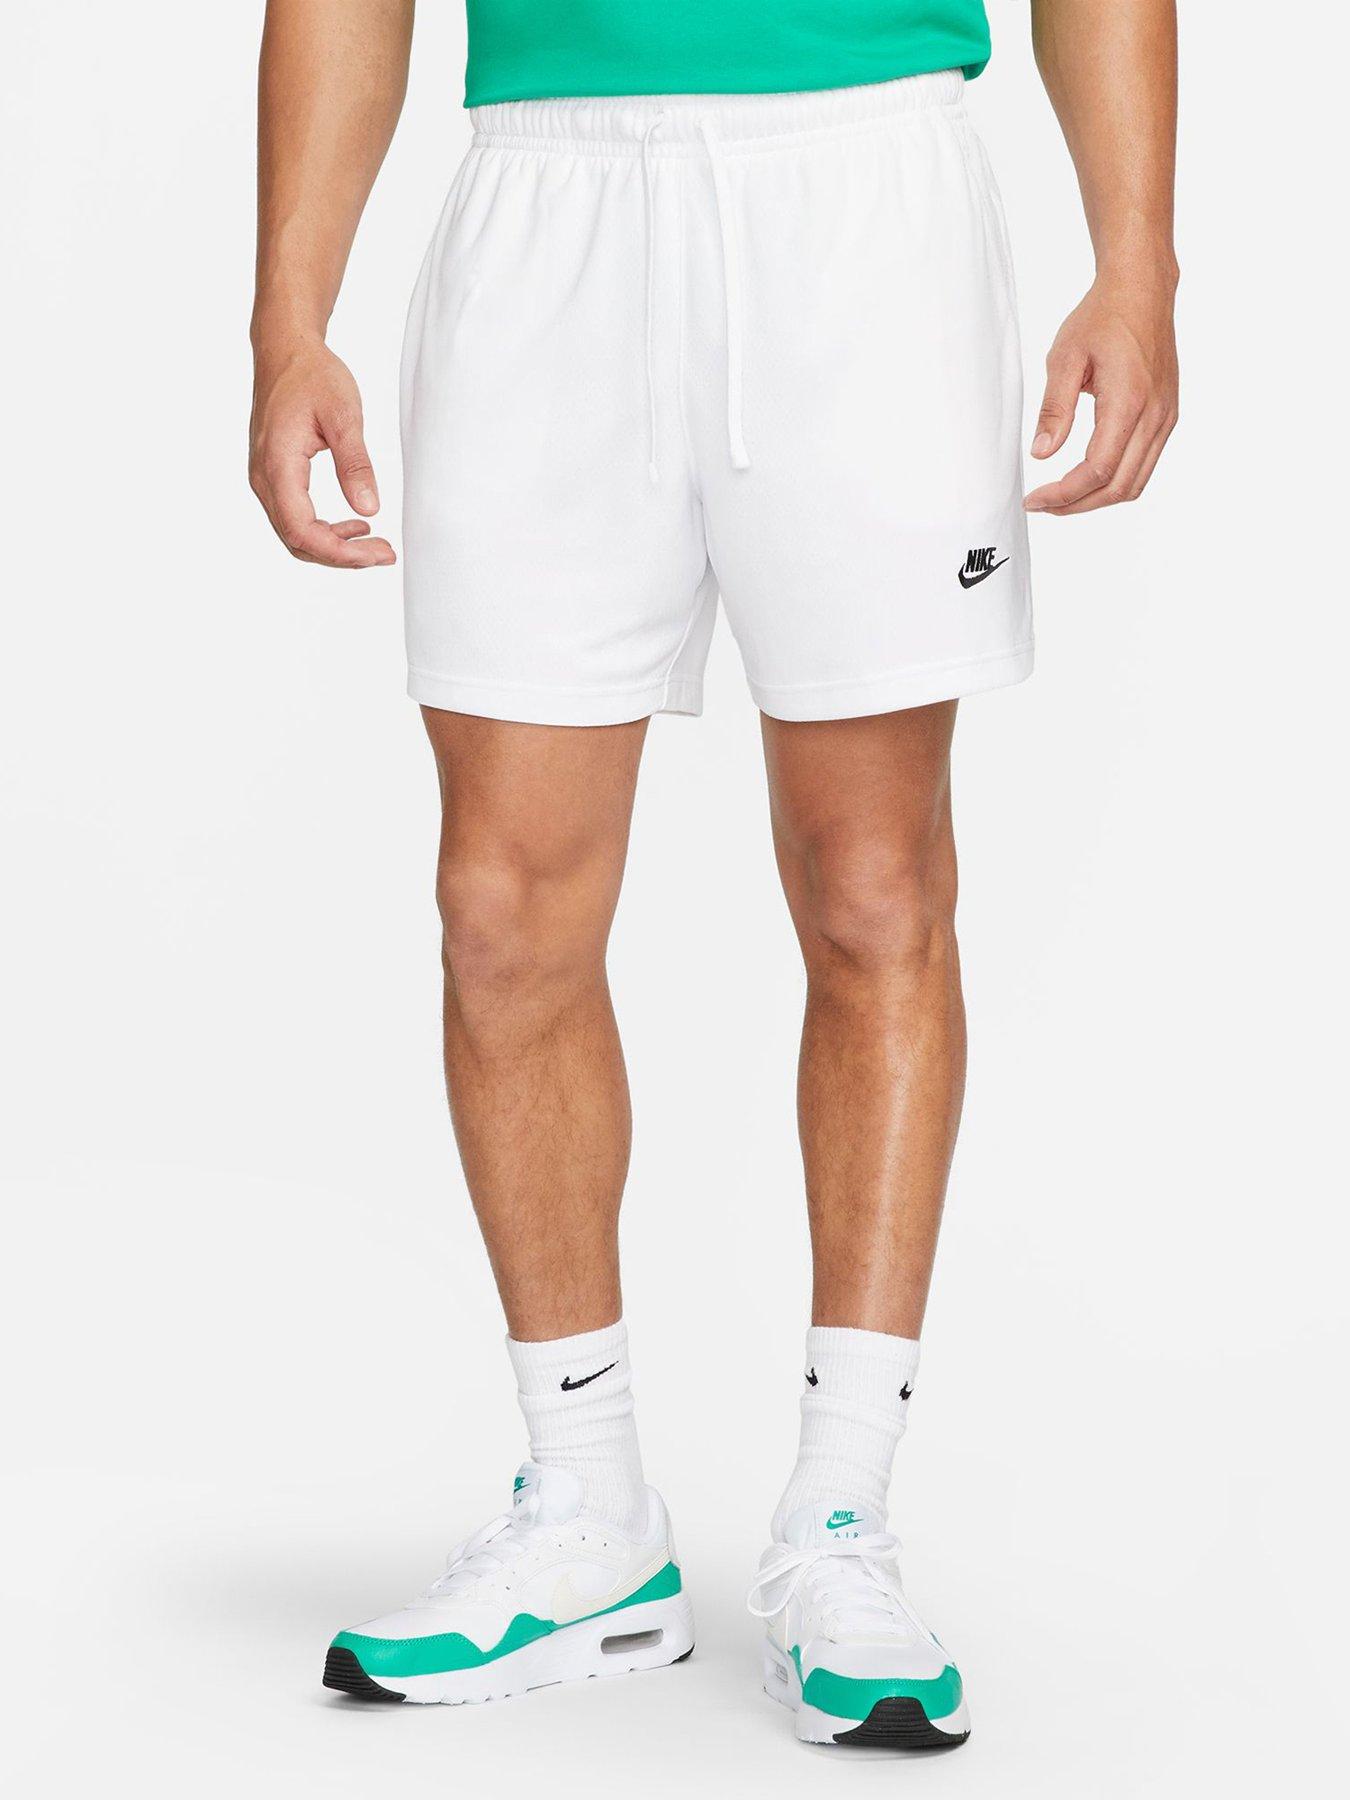 Nike Men's Pro Combat 6 Compression Shorts (White/Matte Silver